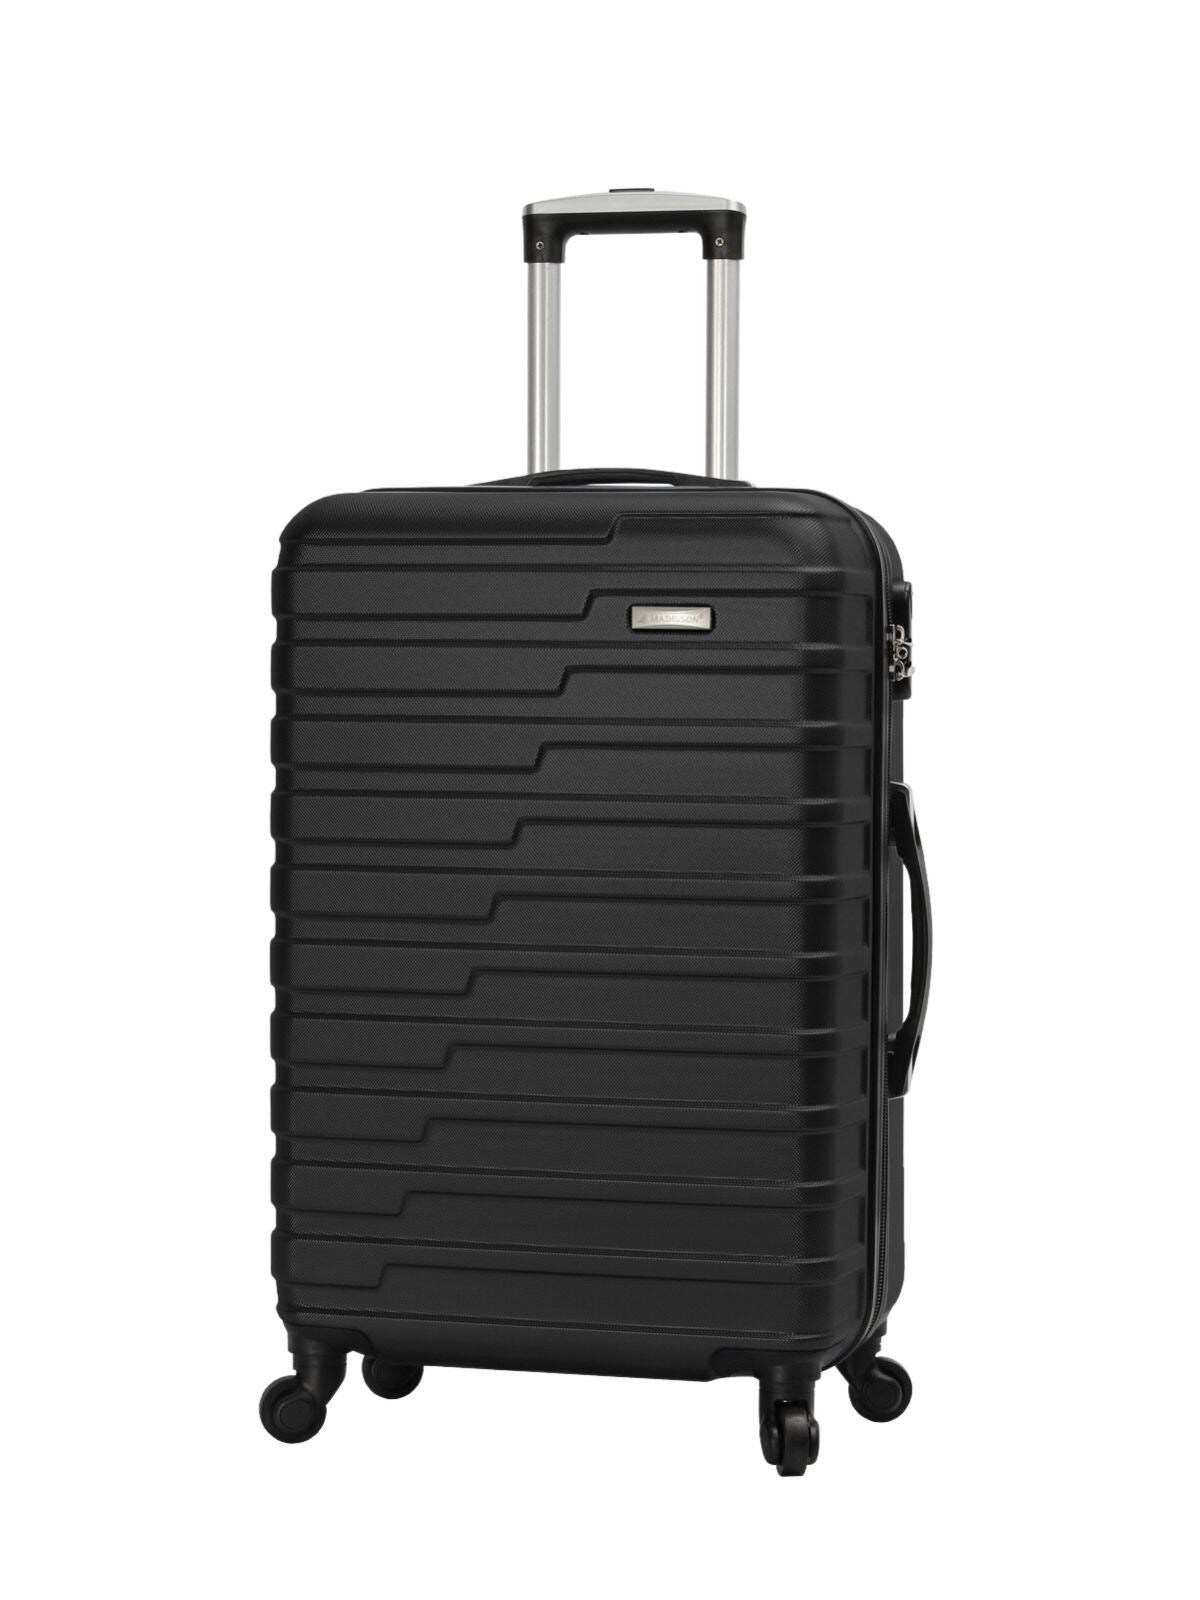 Crossville Medium Hard Shell Suitcase in Black